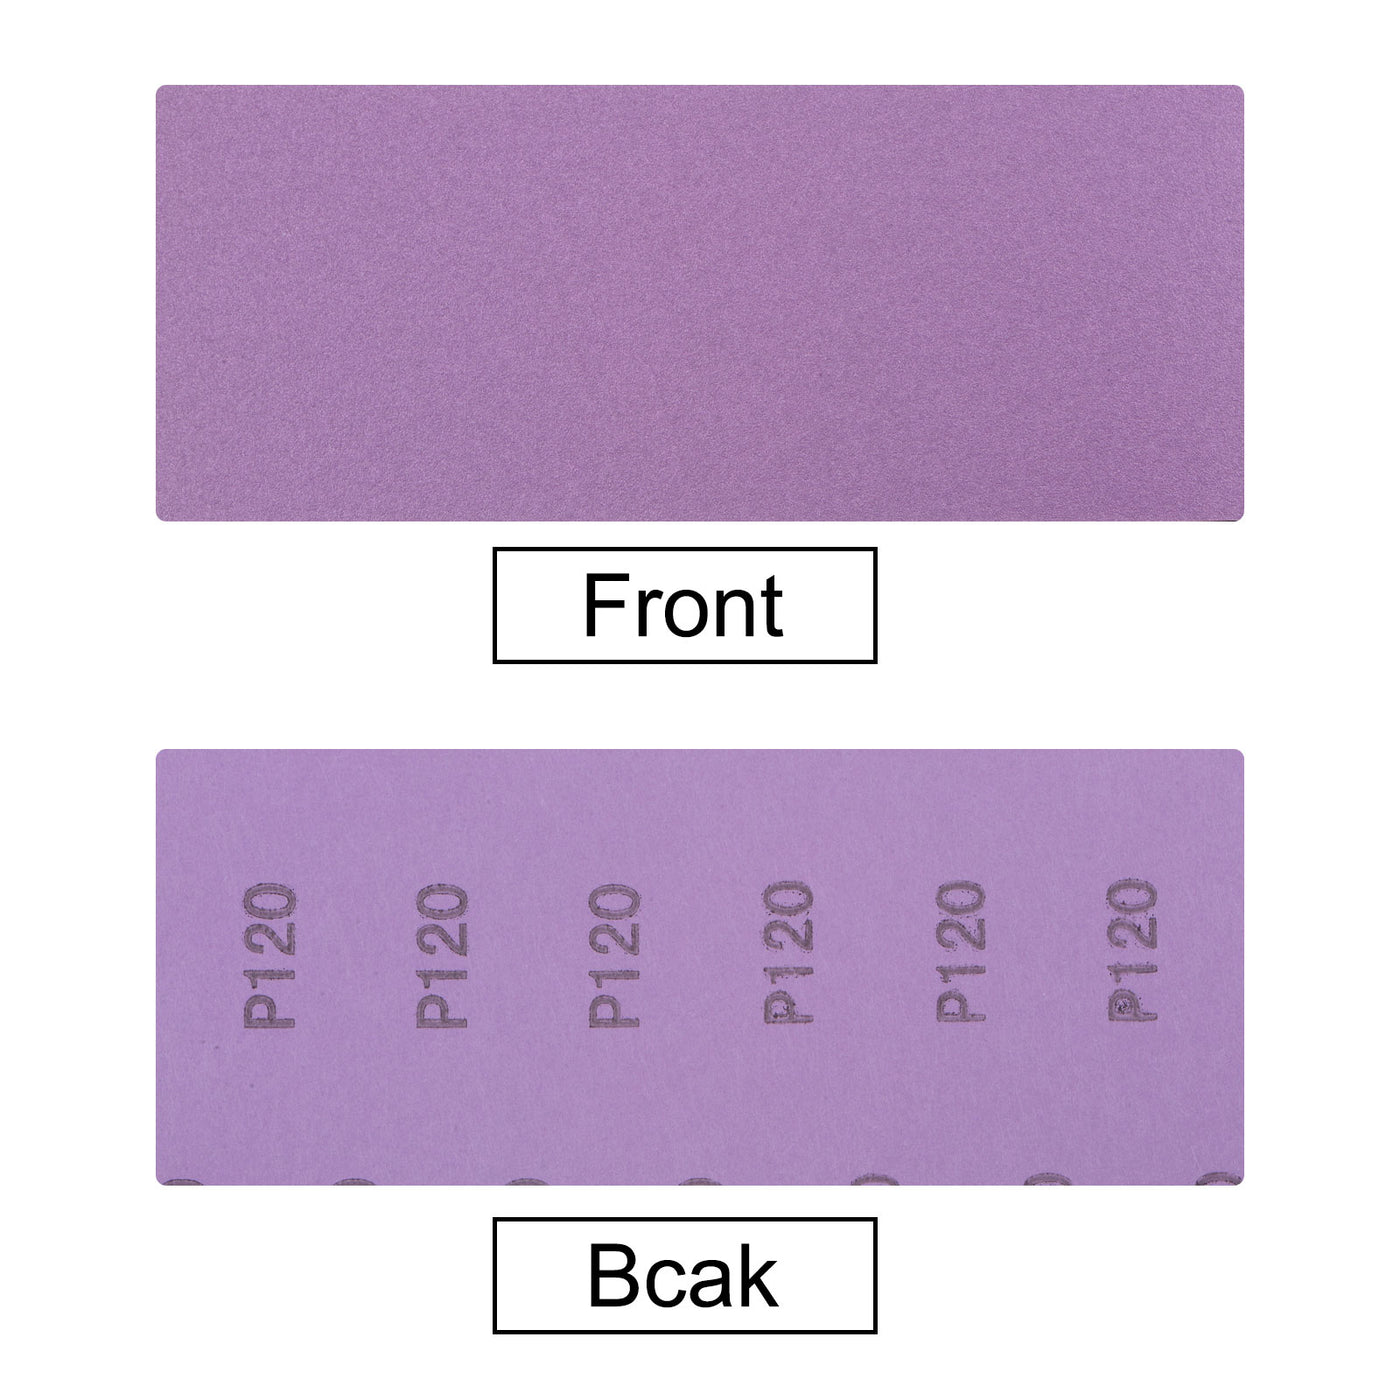 Uxcell Uxcell 10 Pcs Purple Sanding Sheets 60 Grit 9" x 3.7" Aluminum Oxide Sandpapers